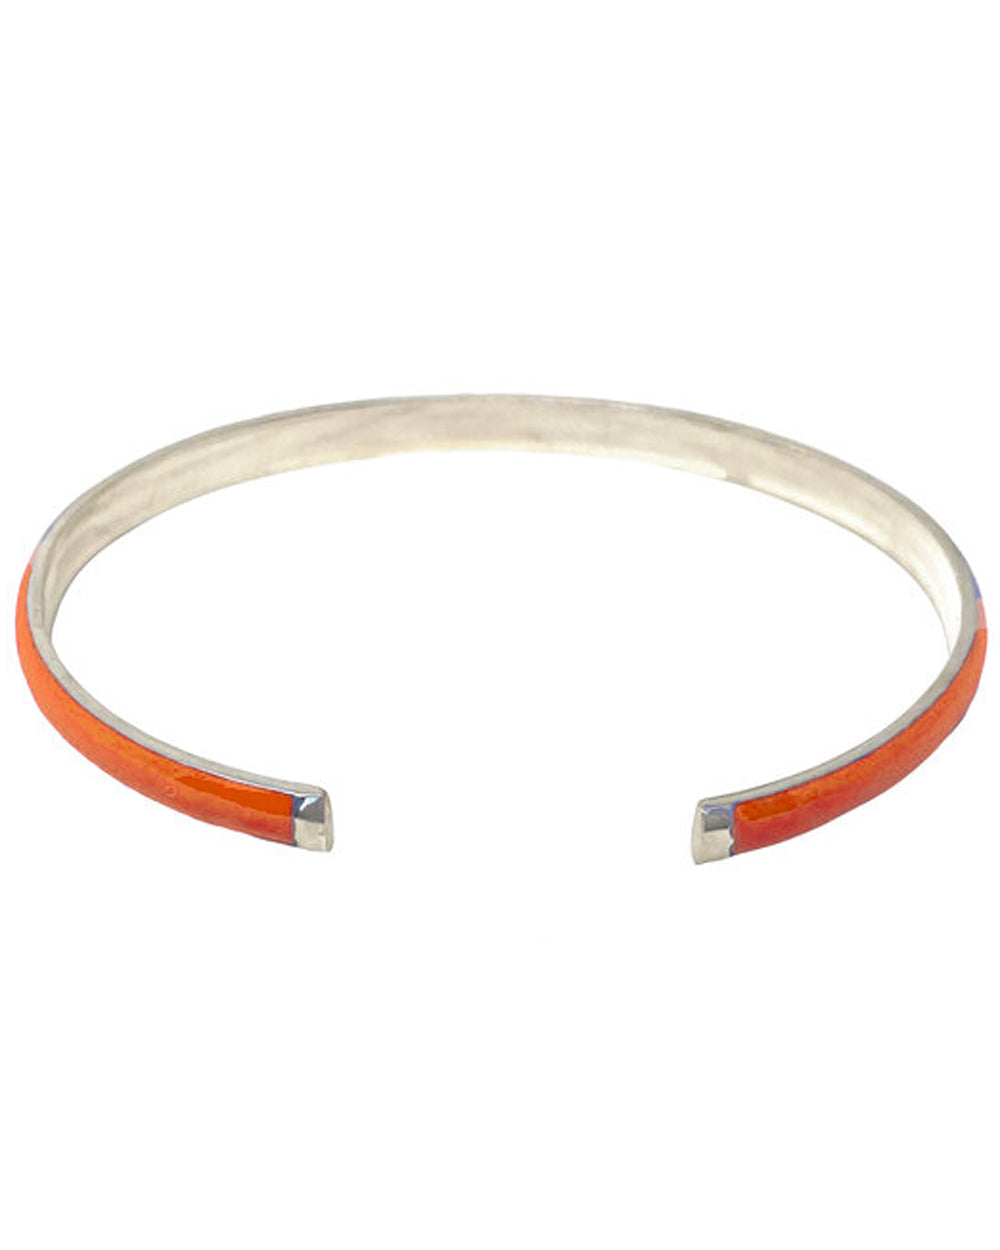 Enamel and Silver Cuff Bracelet in Florida Orange